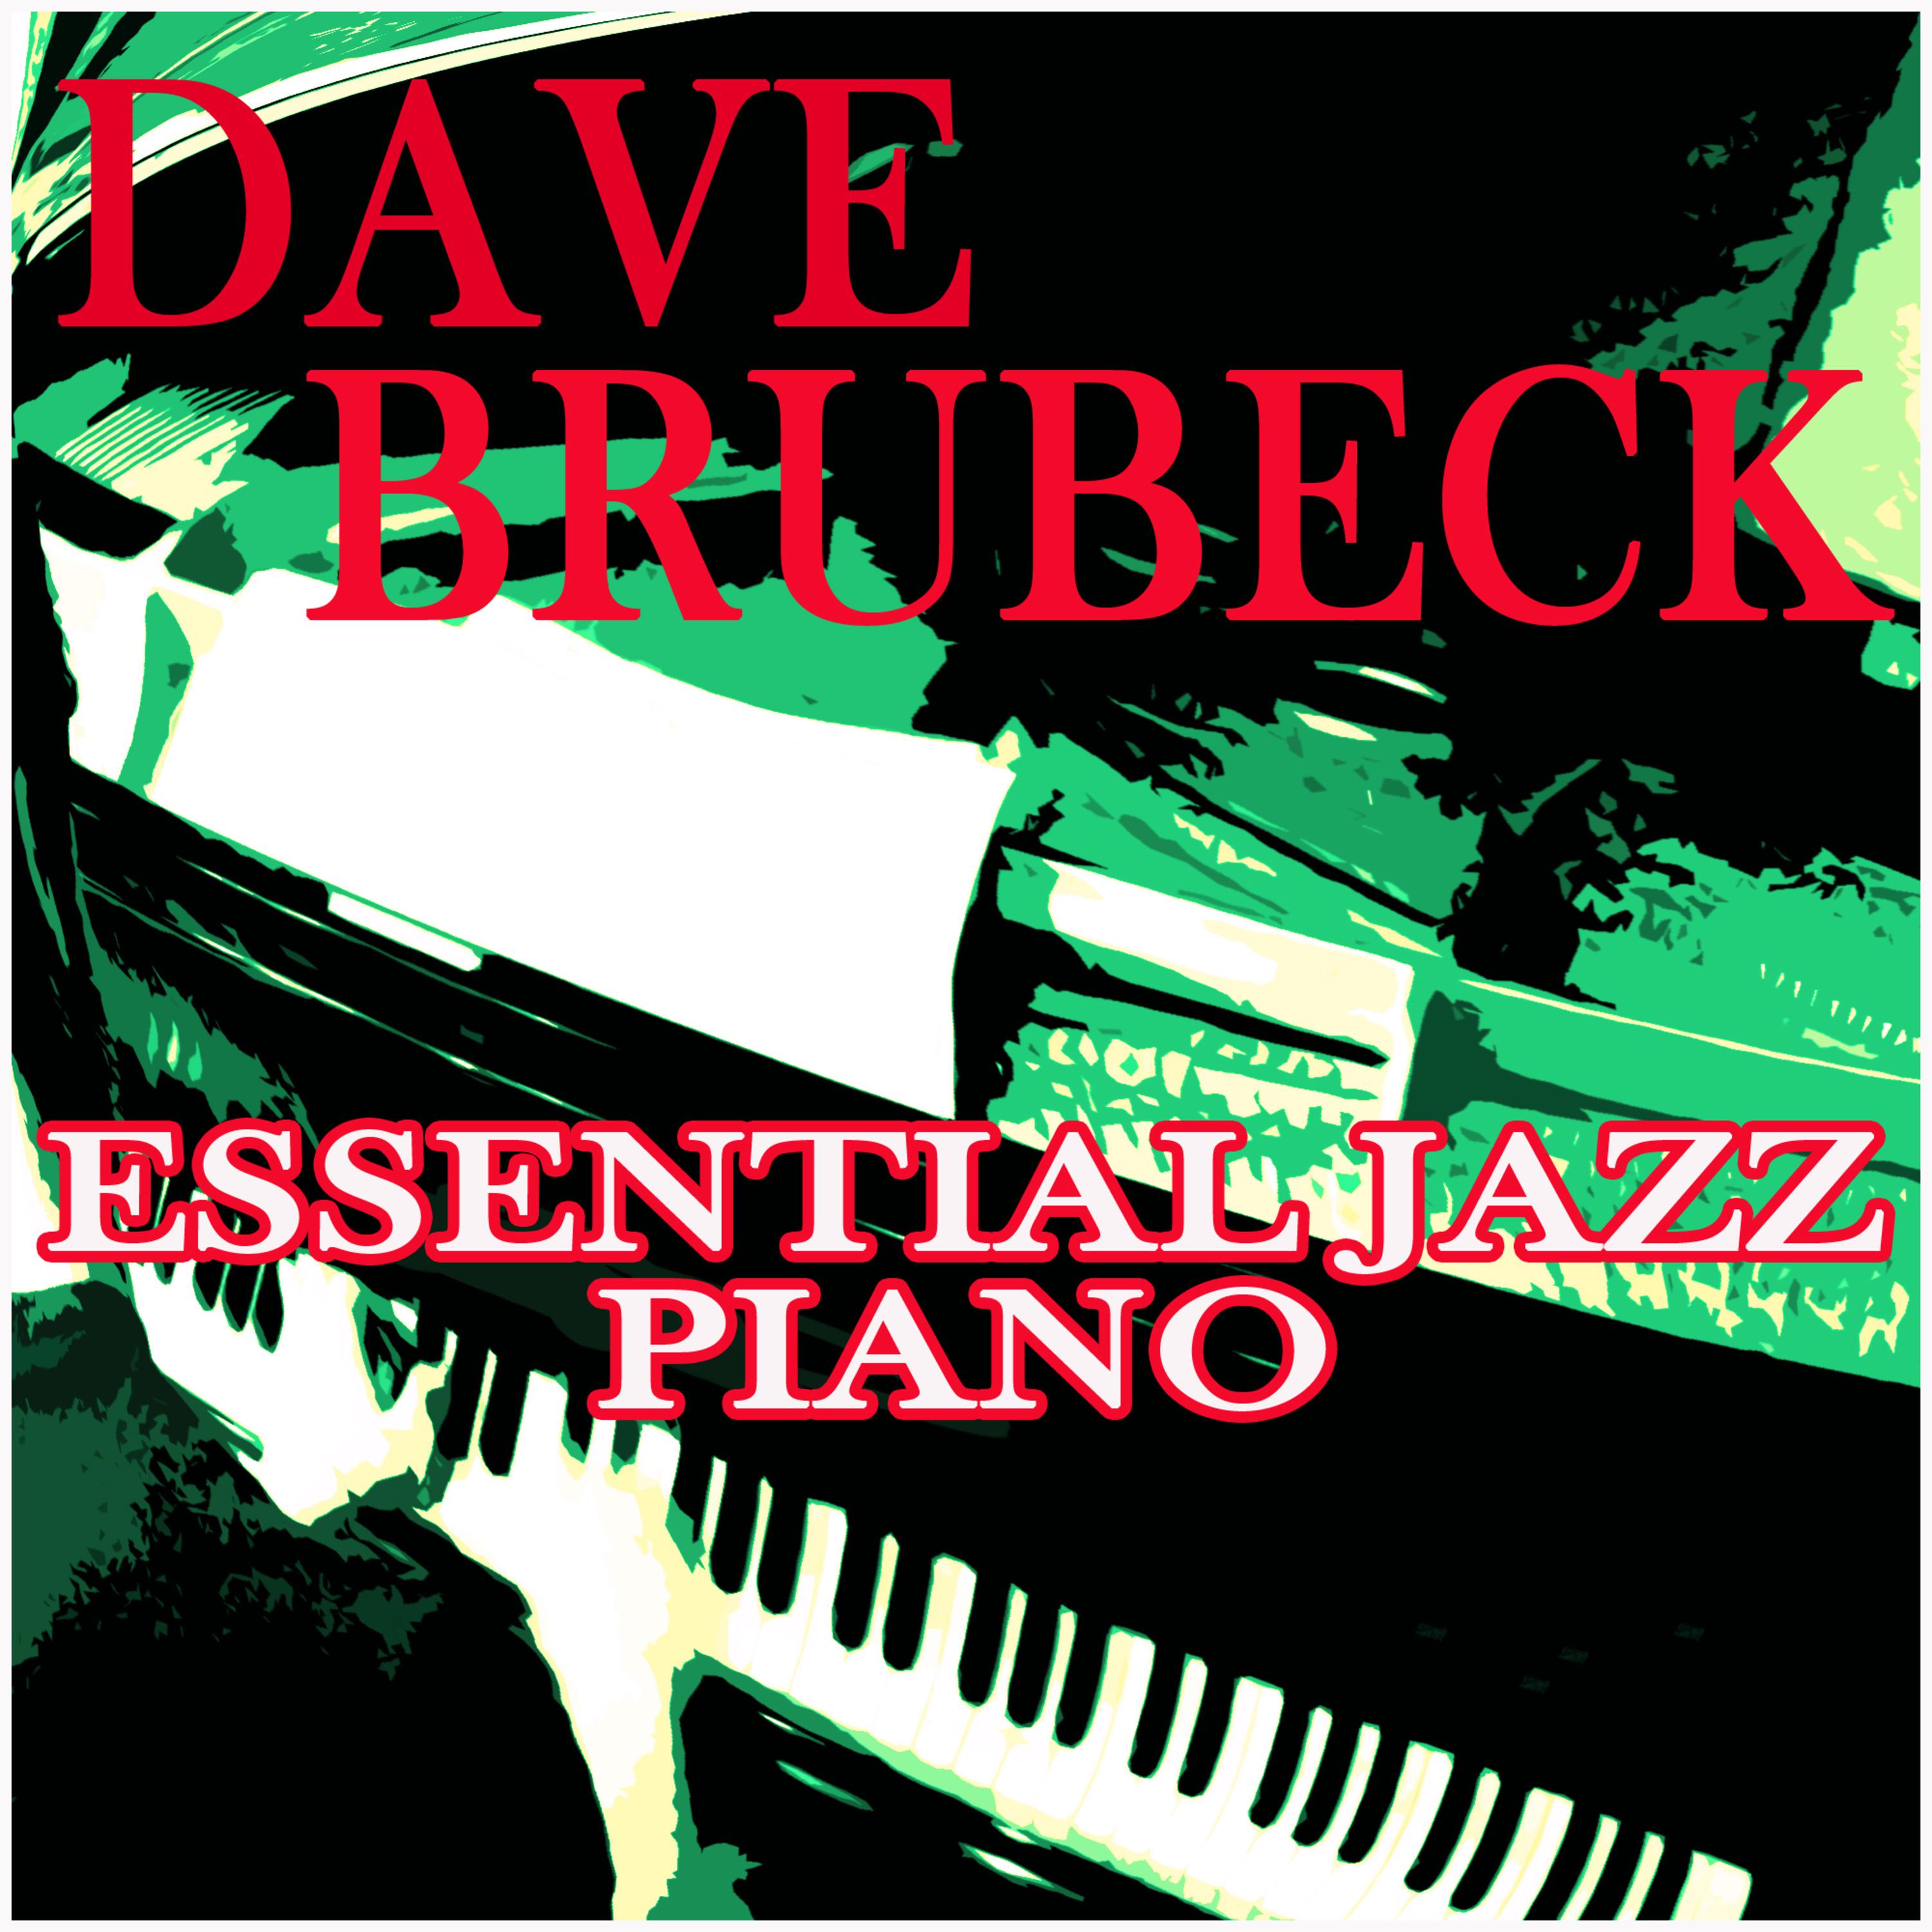 Essential Jazz Piano